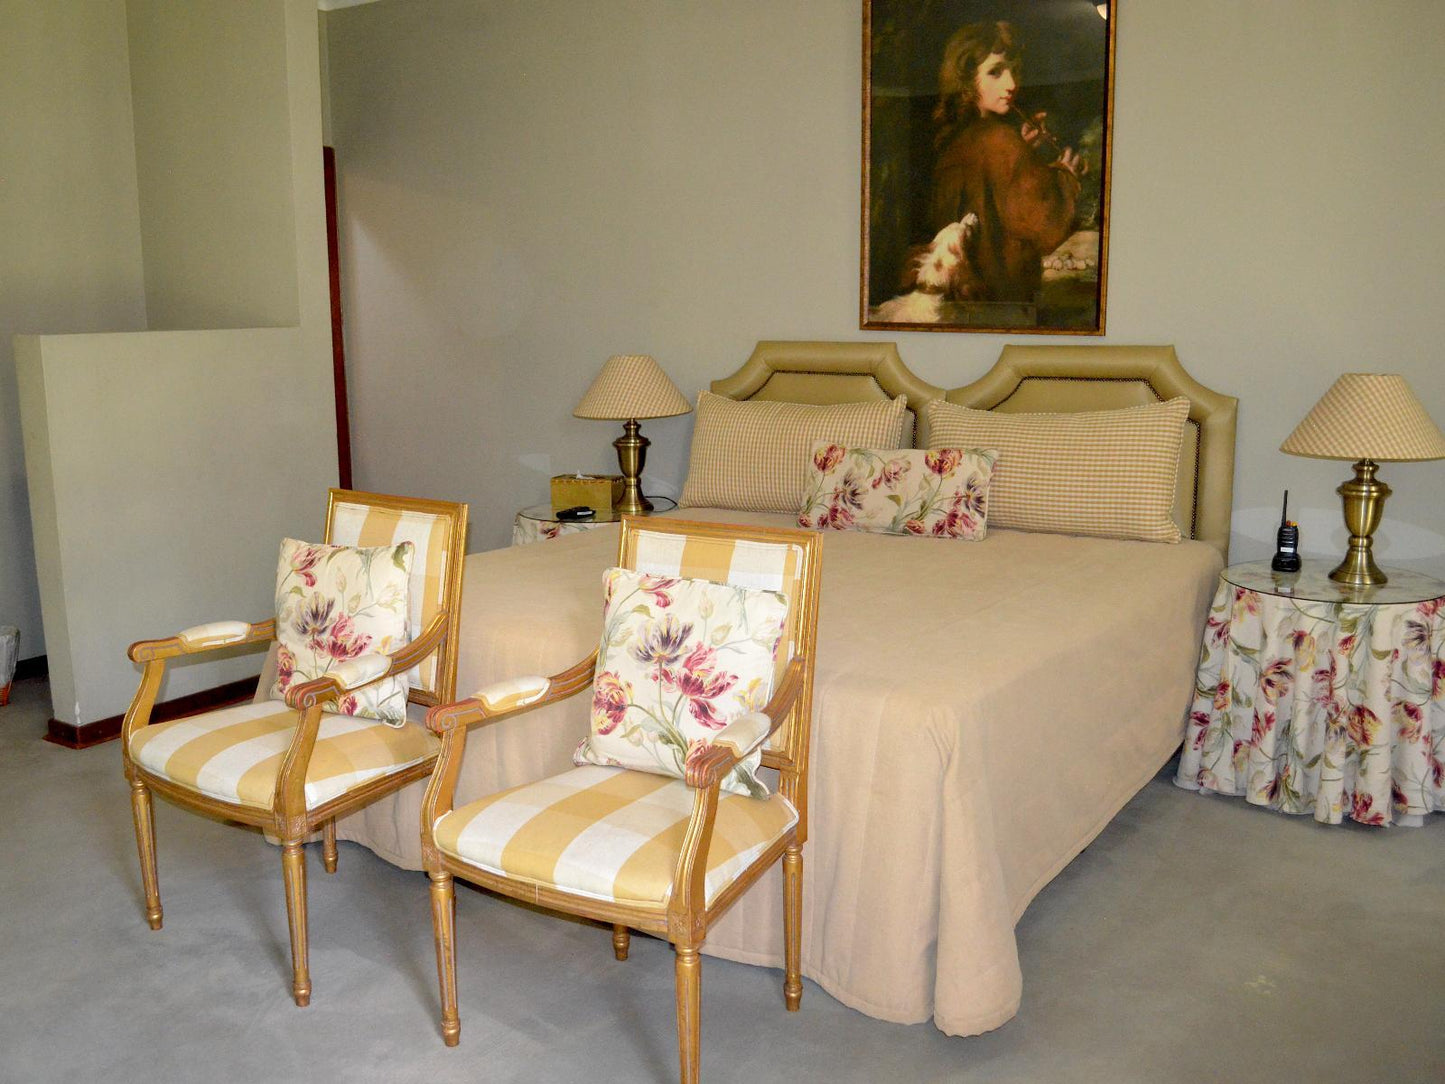 Luxury Prestige Room 3 @ Leeuwenhof Country Lodge & Garden Spa